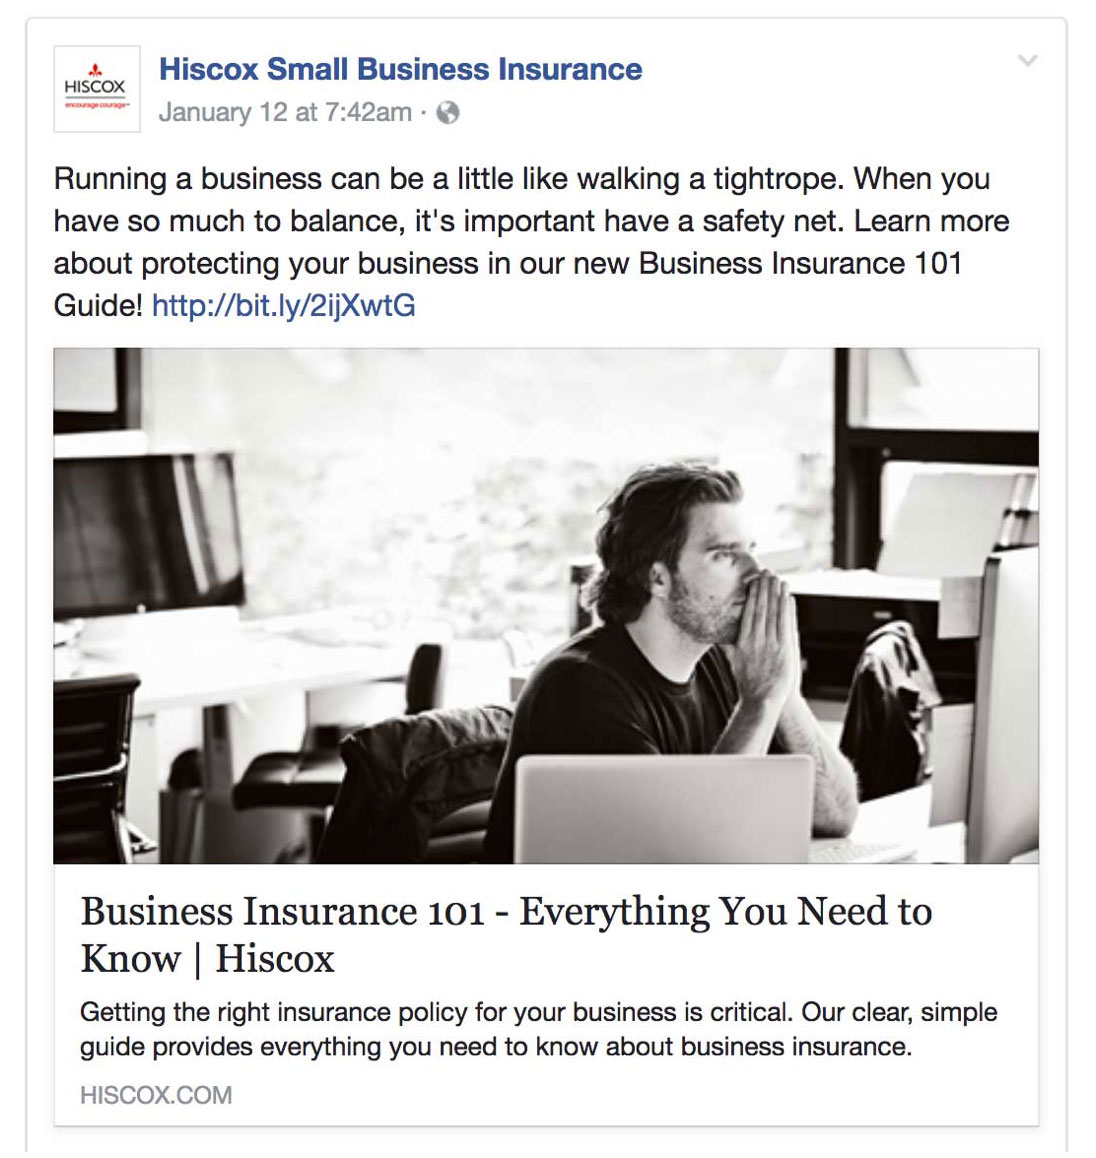 Business Insurance 101